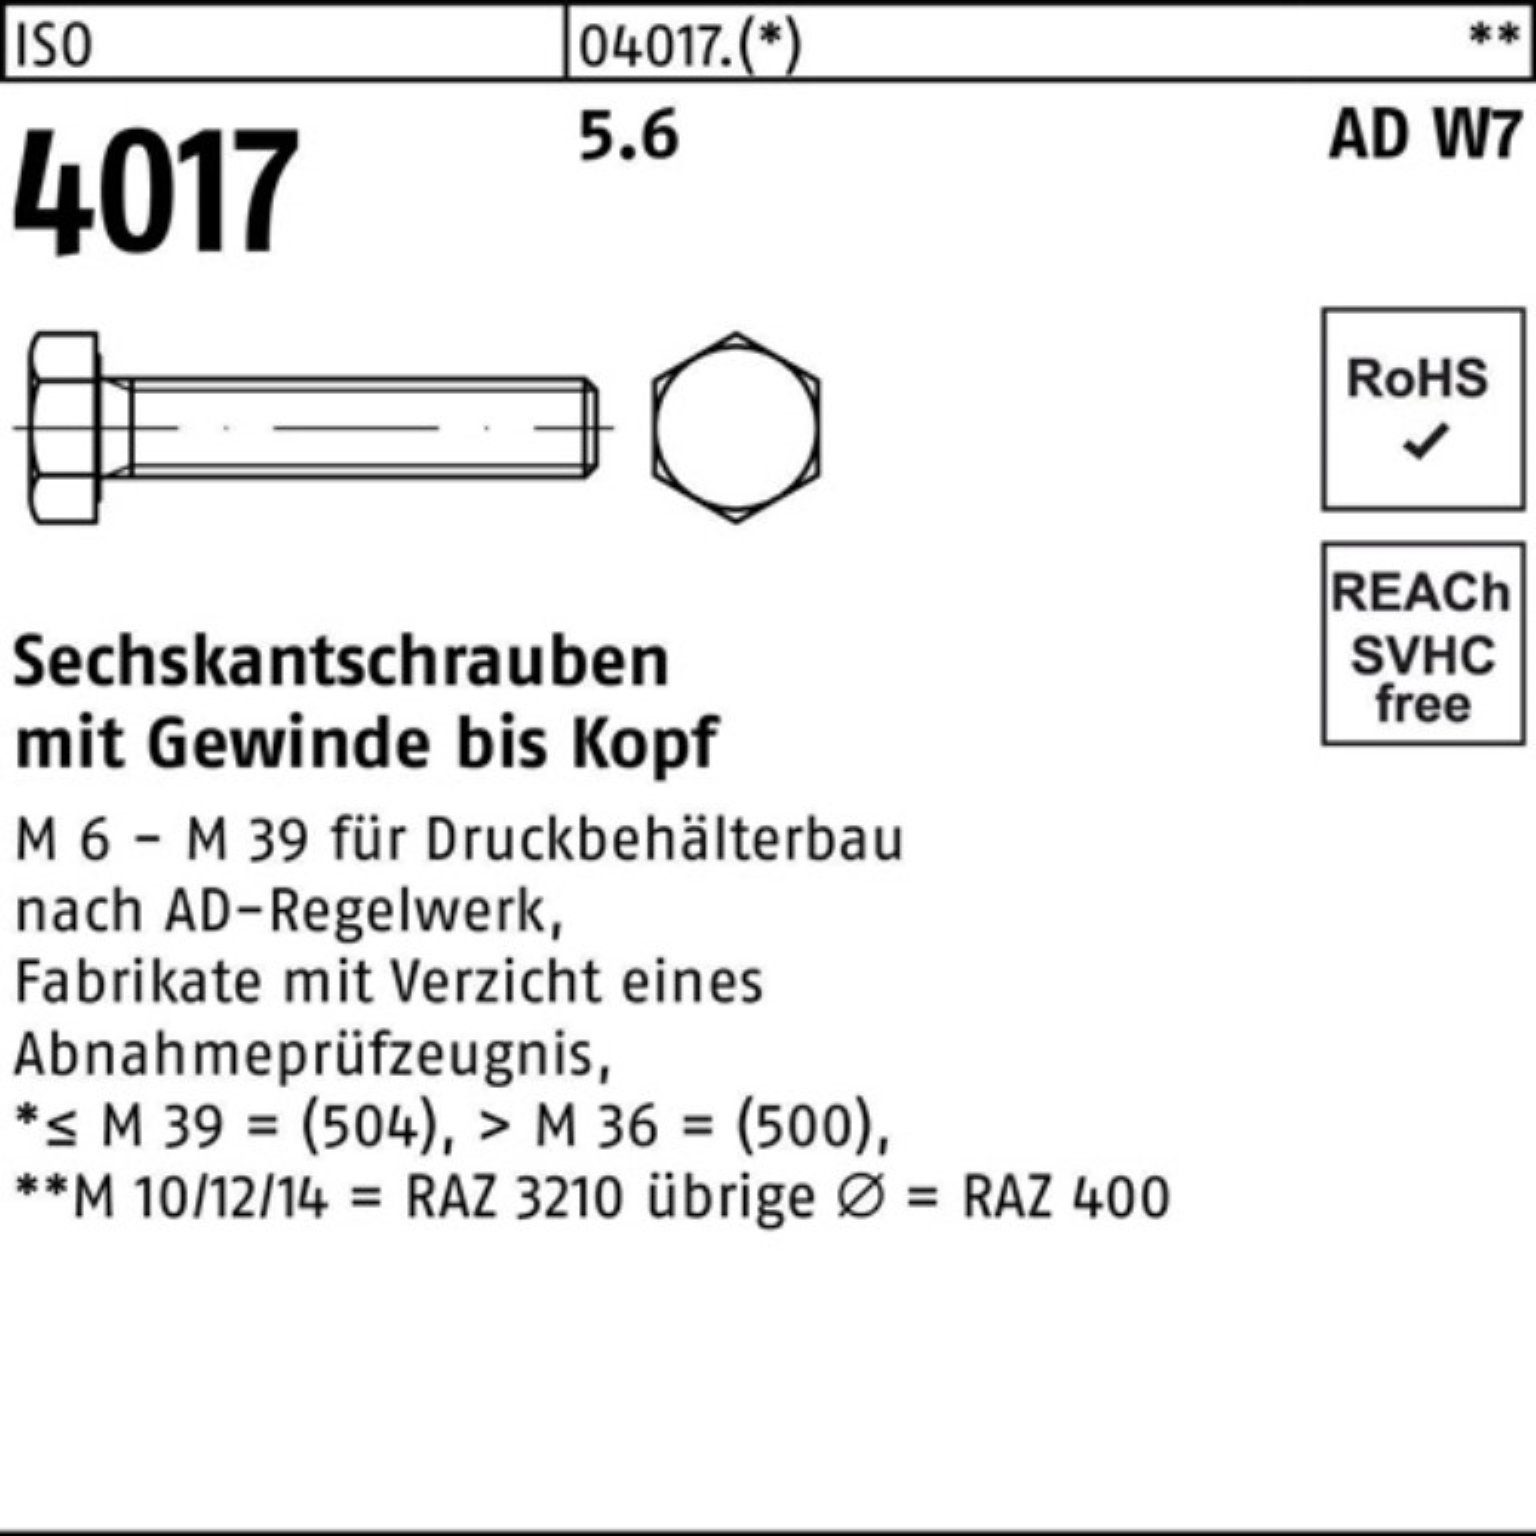 Bufab Sechskantschraube 100er Sechskantschraube VG ISO AD Pack 25 80 5.6 M24x Stück I 4017 W7